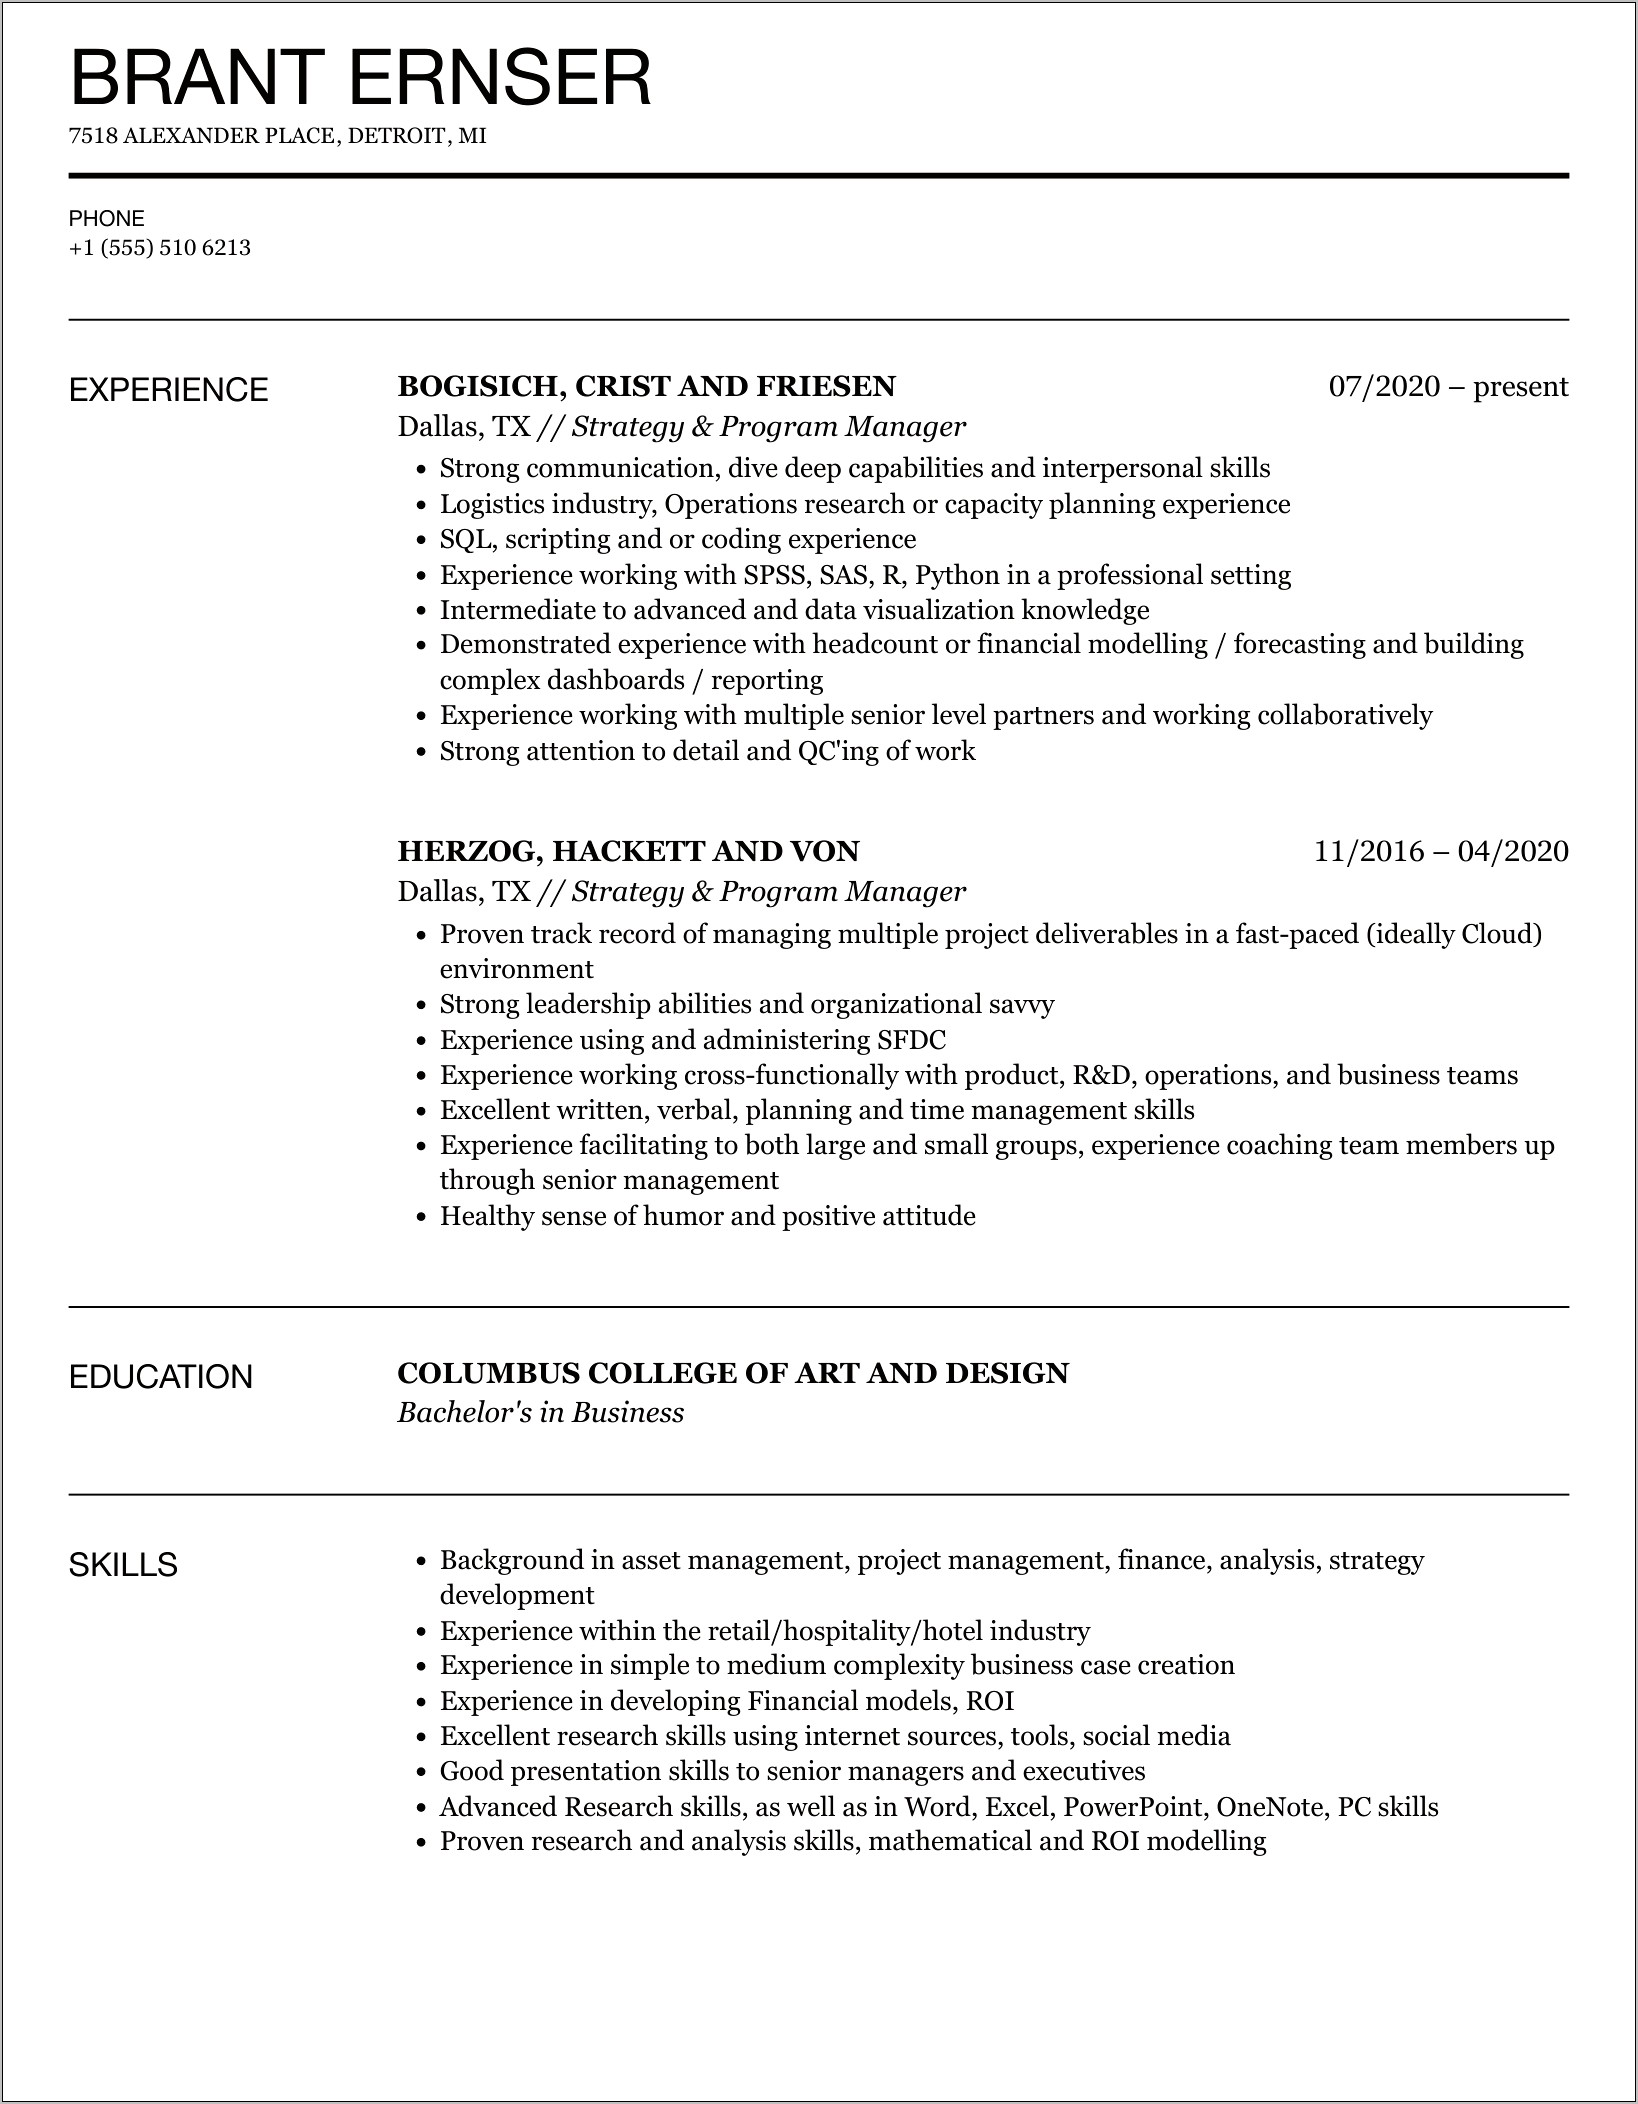 Resume Accomplishment Statements Program Manager